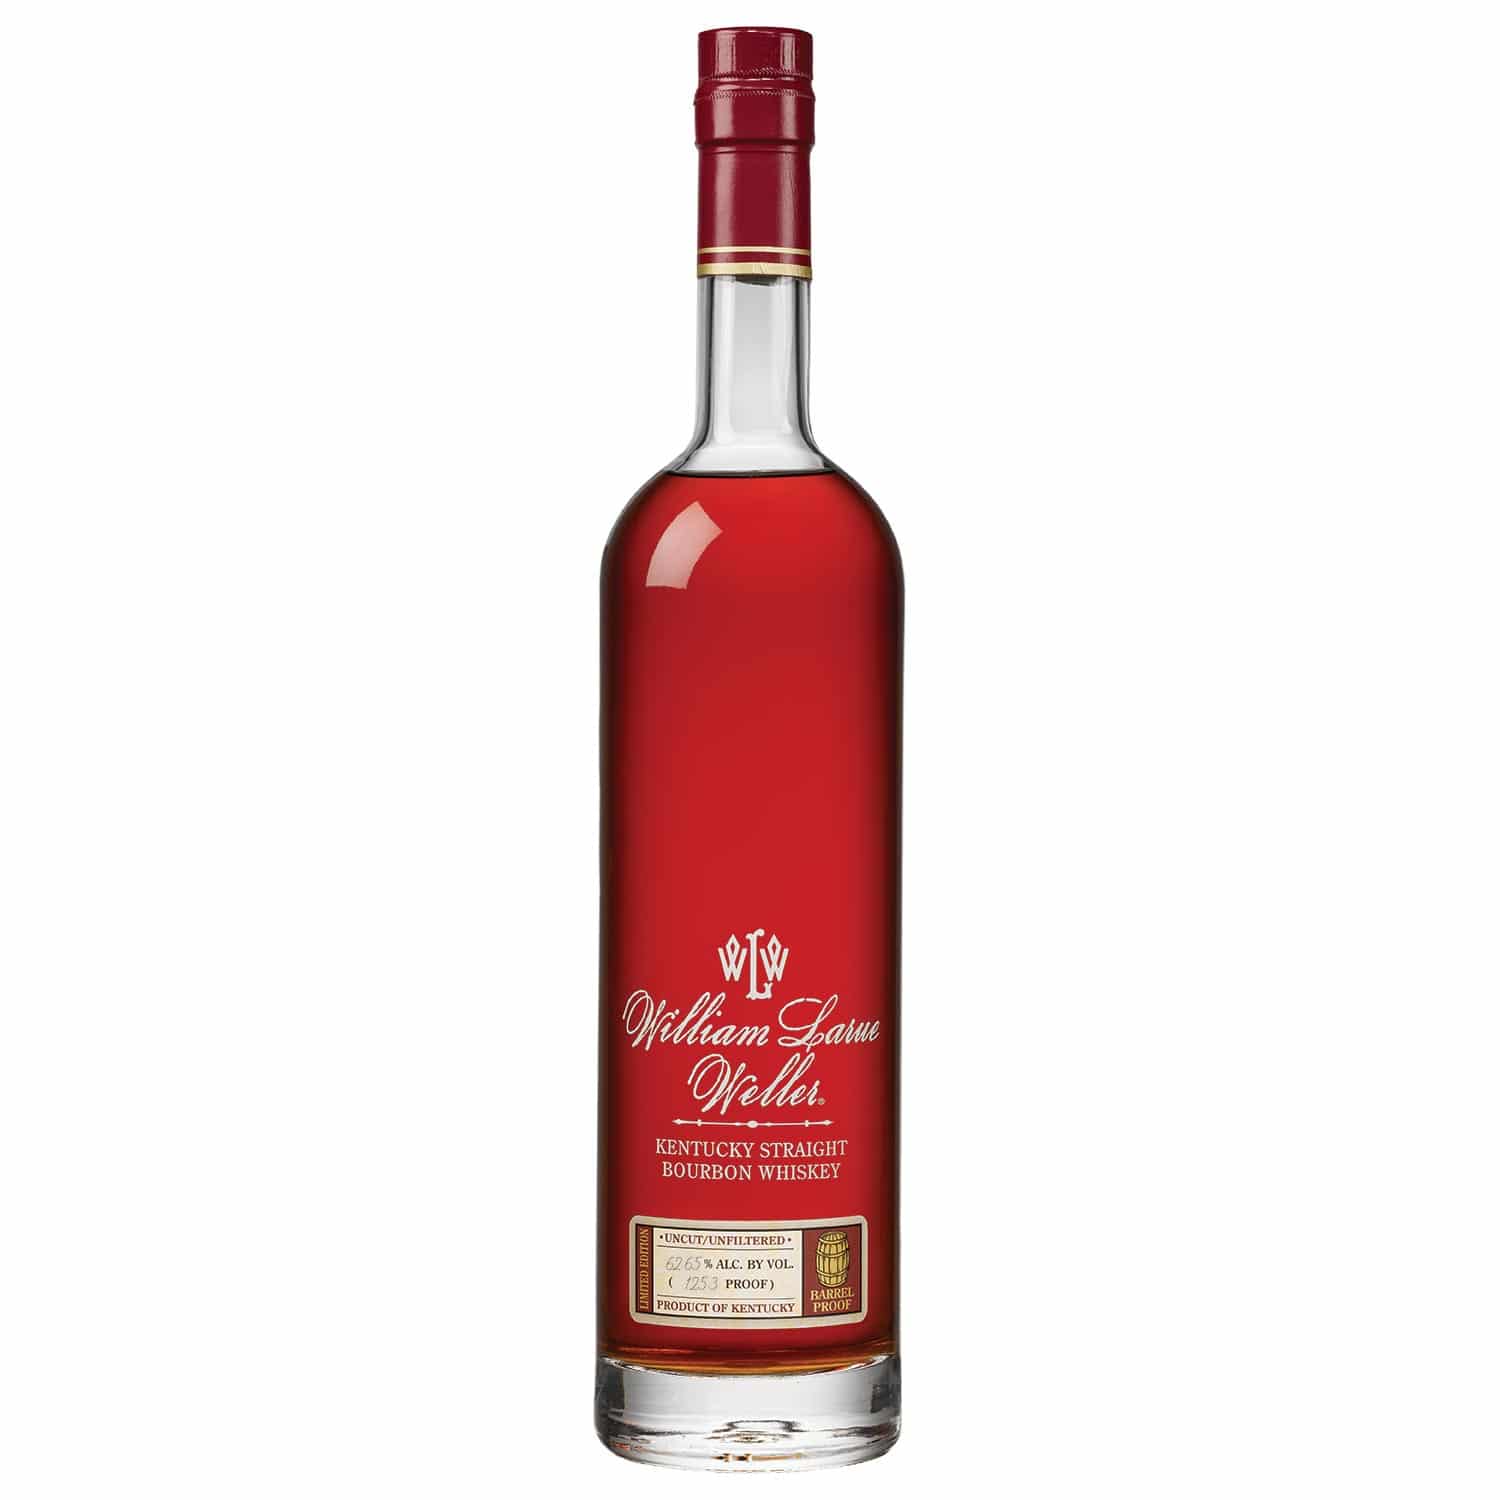 William Larue Weller Kentucky Straight Bourbon Whiskey 2021 - Barbank